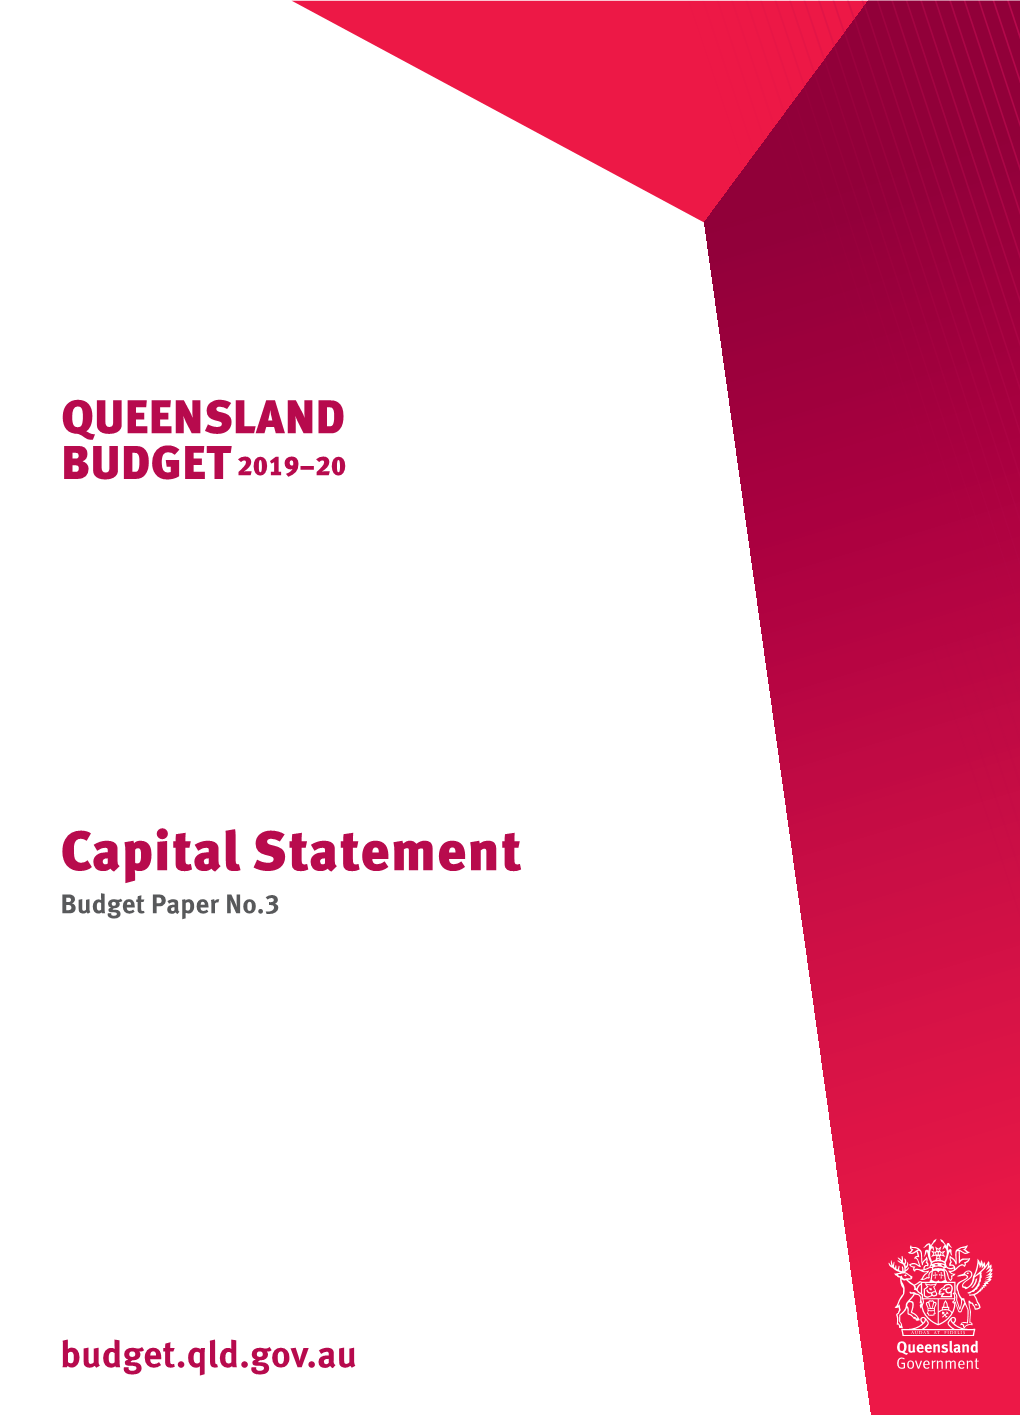 Capital Statement Budget Paper No.3